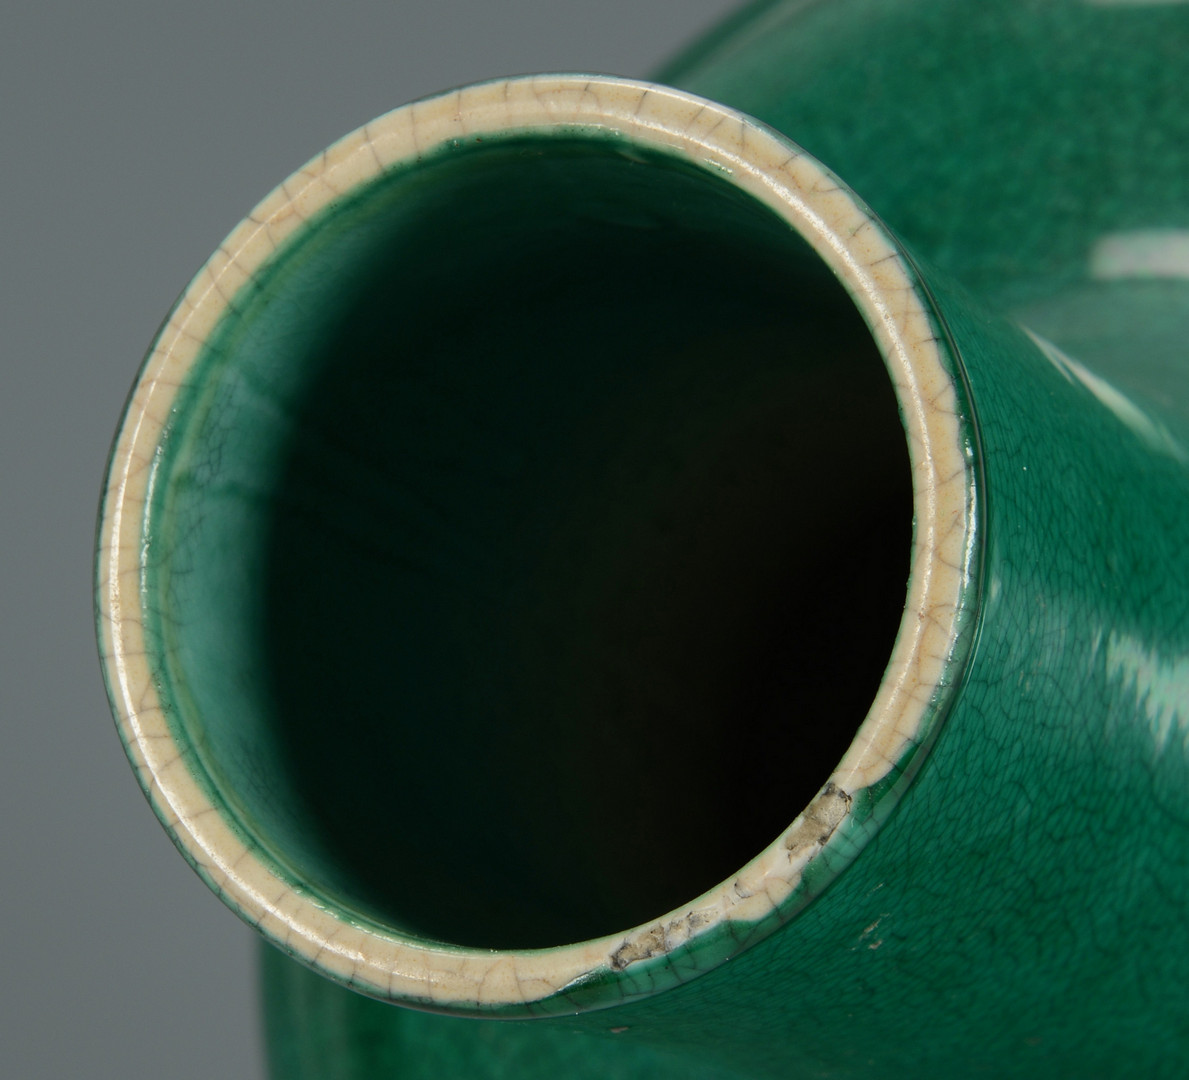 Lot 231: Large Chinese Green Porcelain Bottle Vase